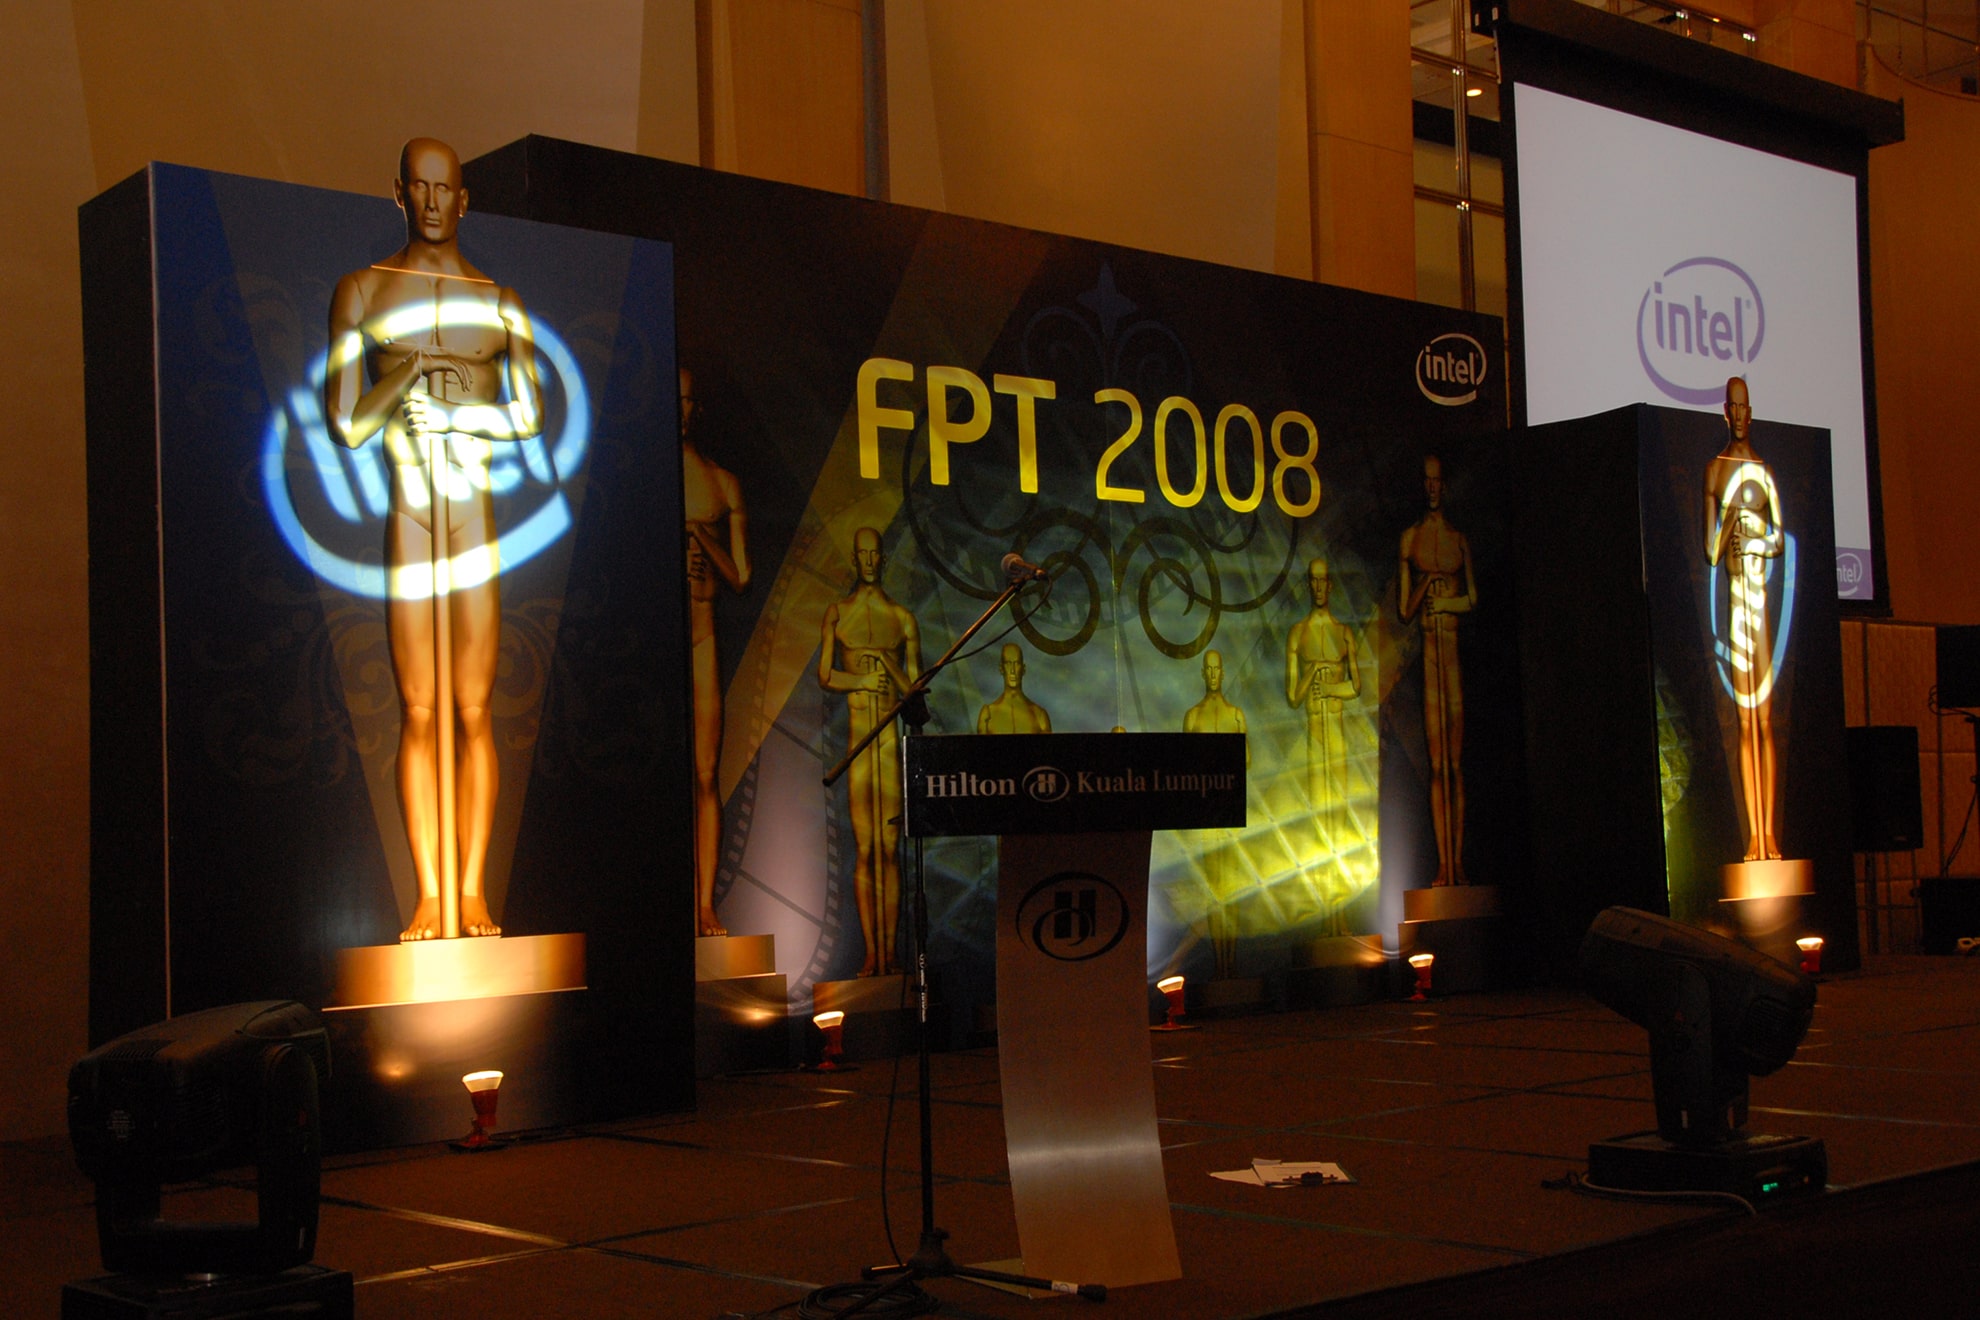 Intel In Malaysia - FPT 2008